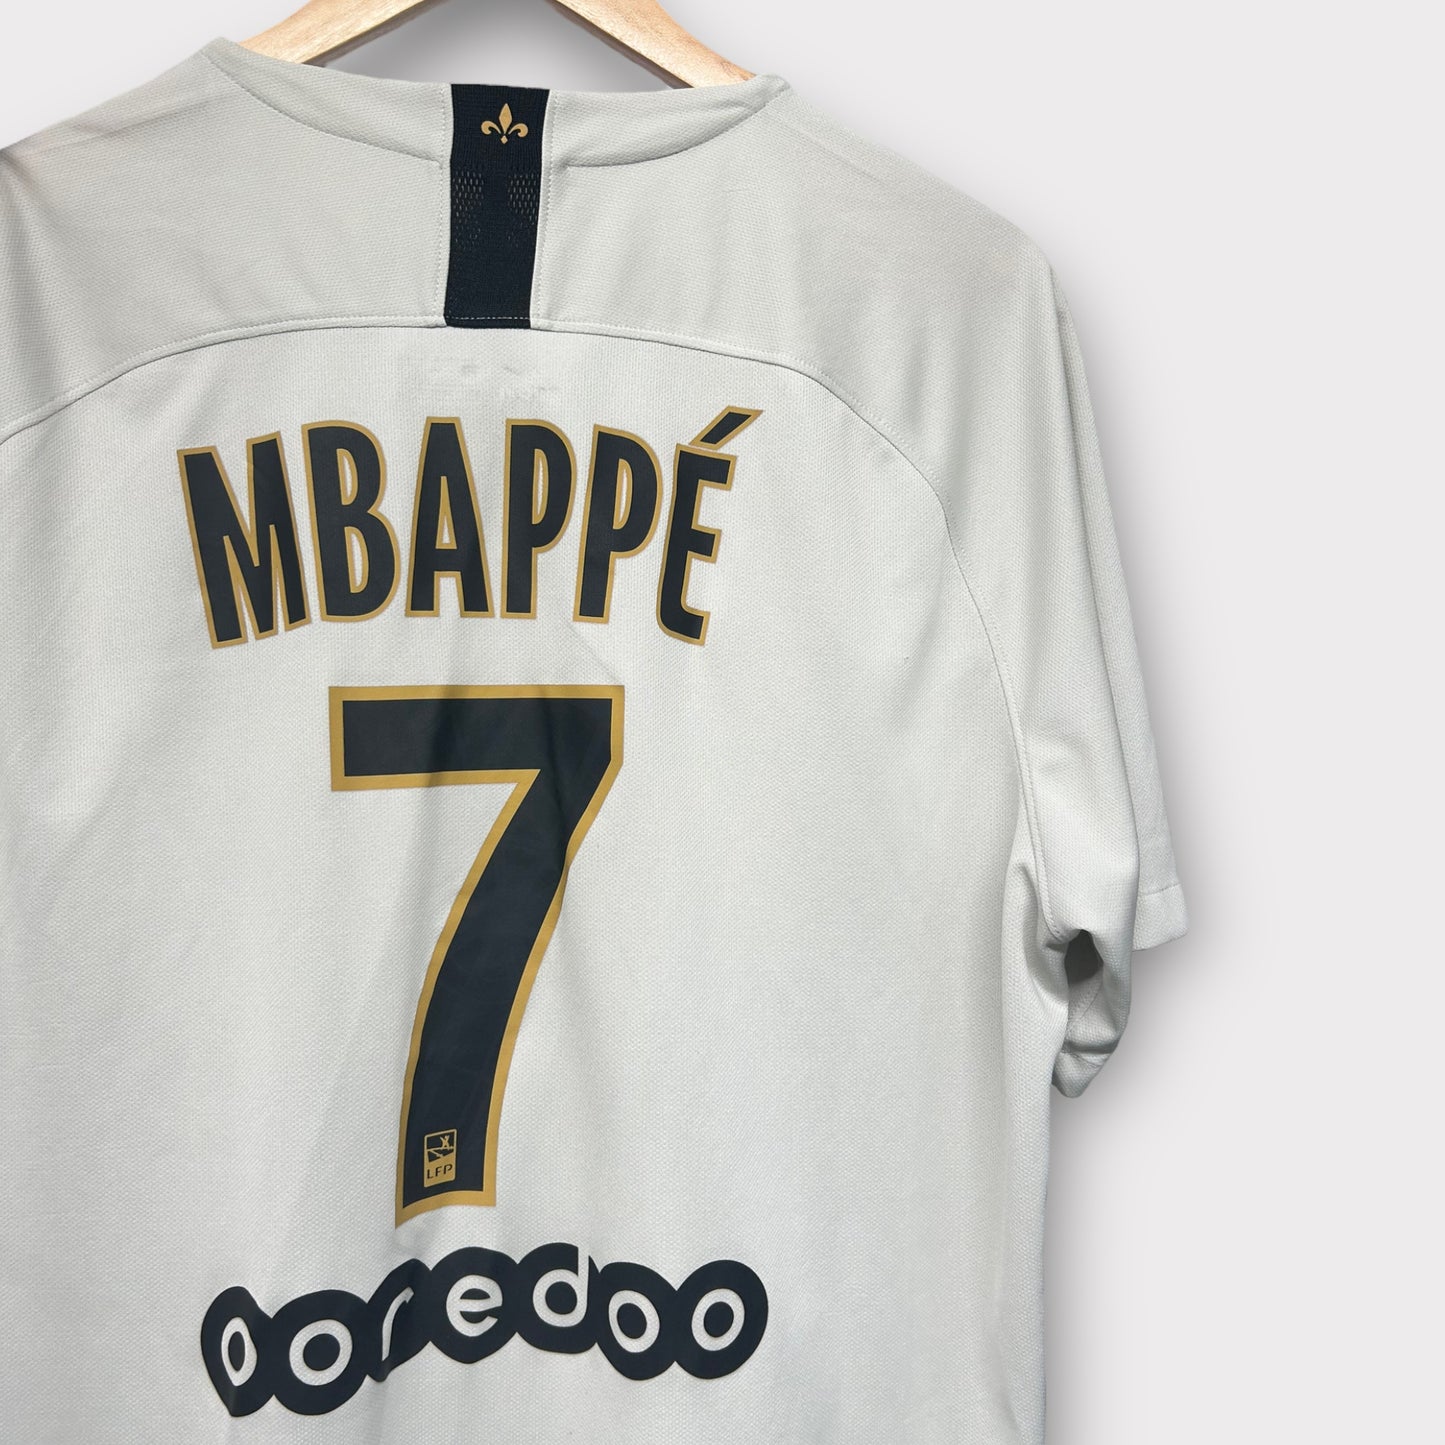 PSG 2018/19 Away Shirt - Mbappe 7 (XL)